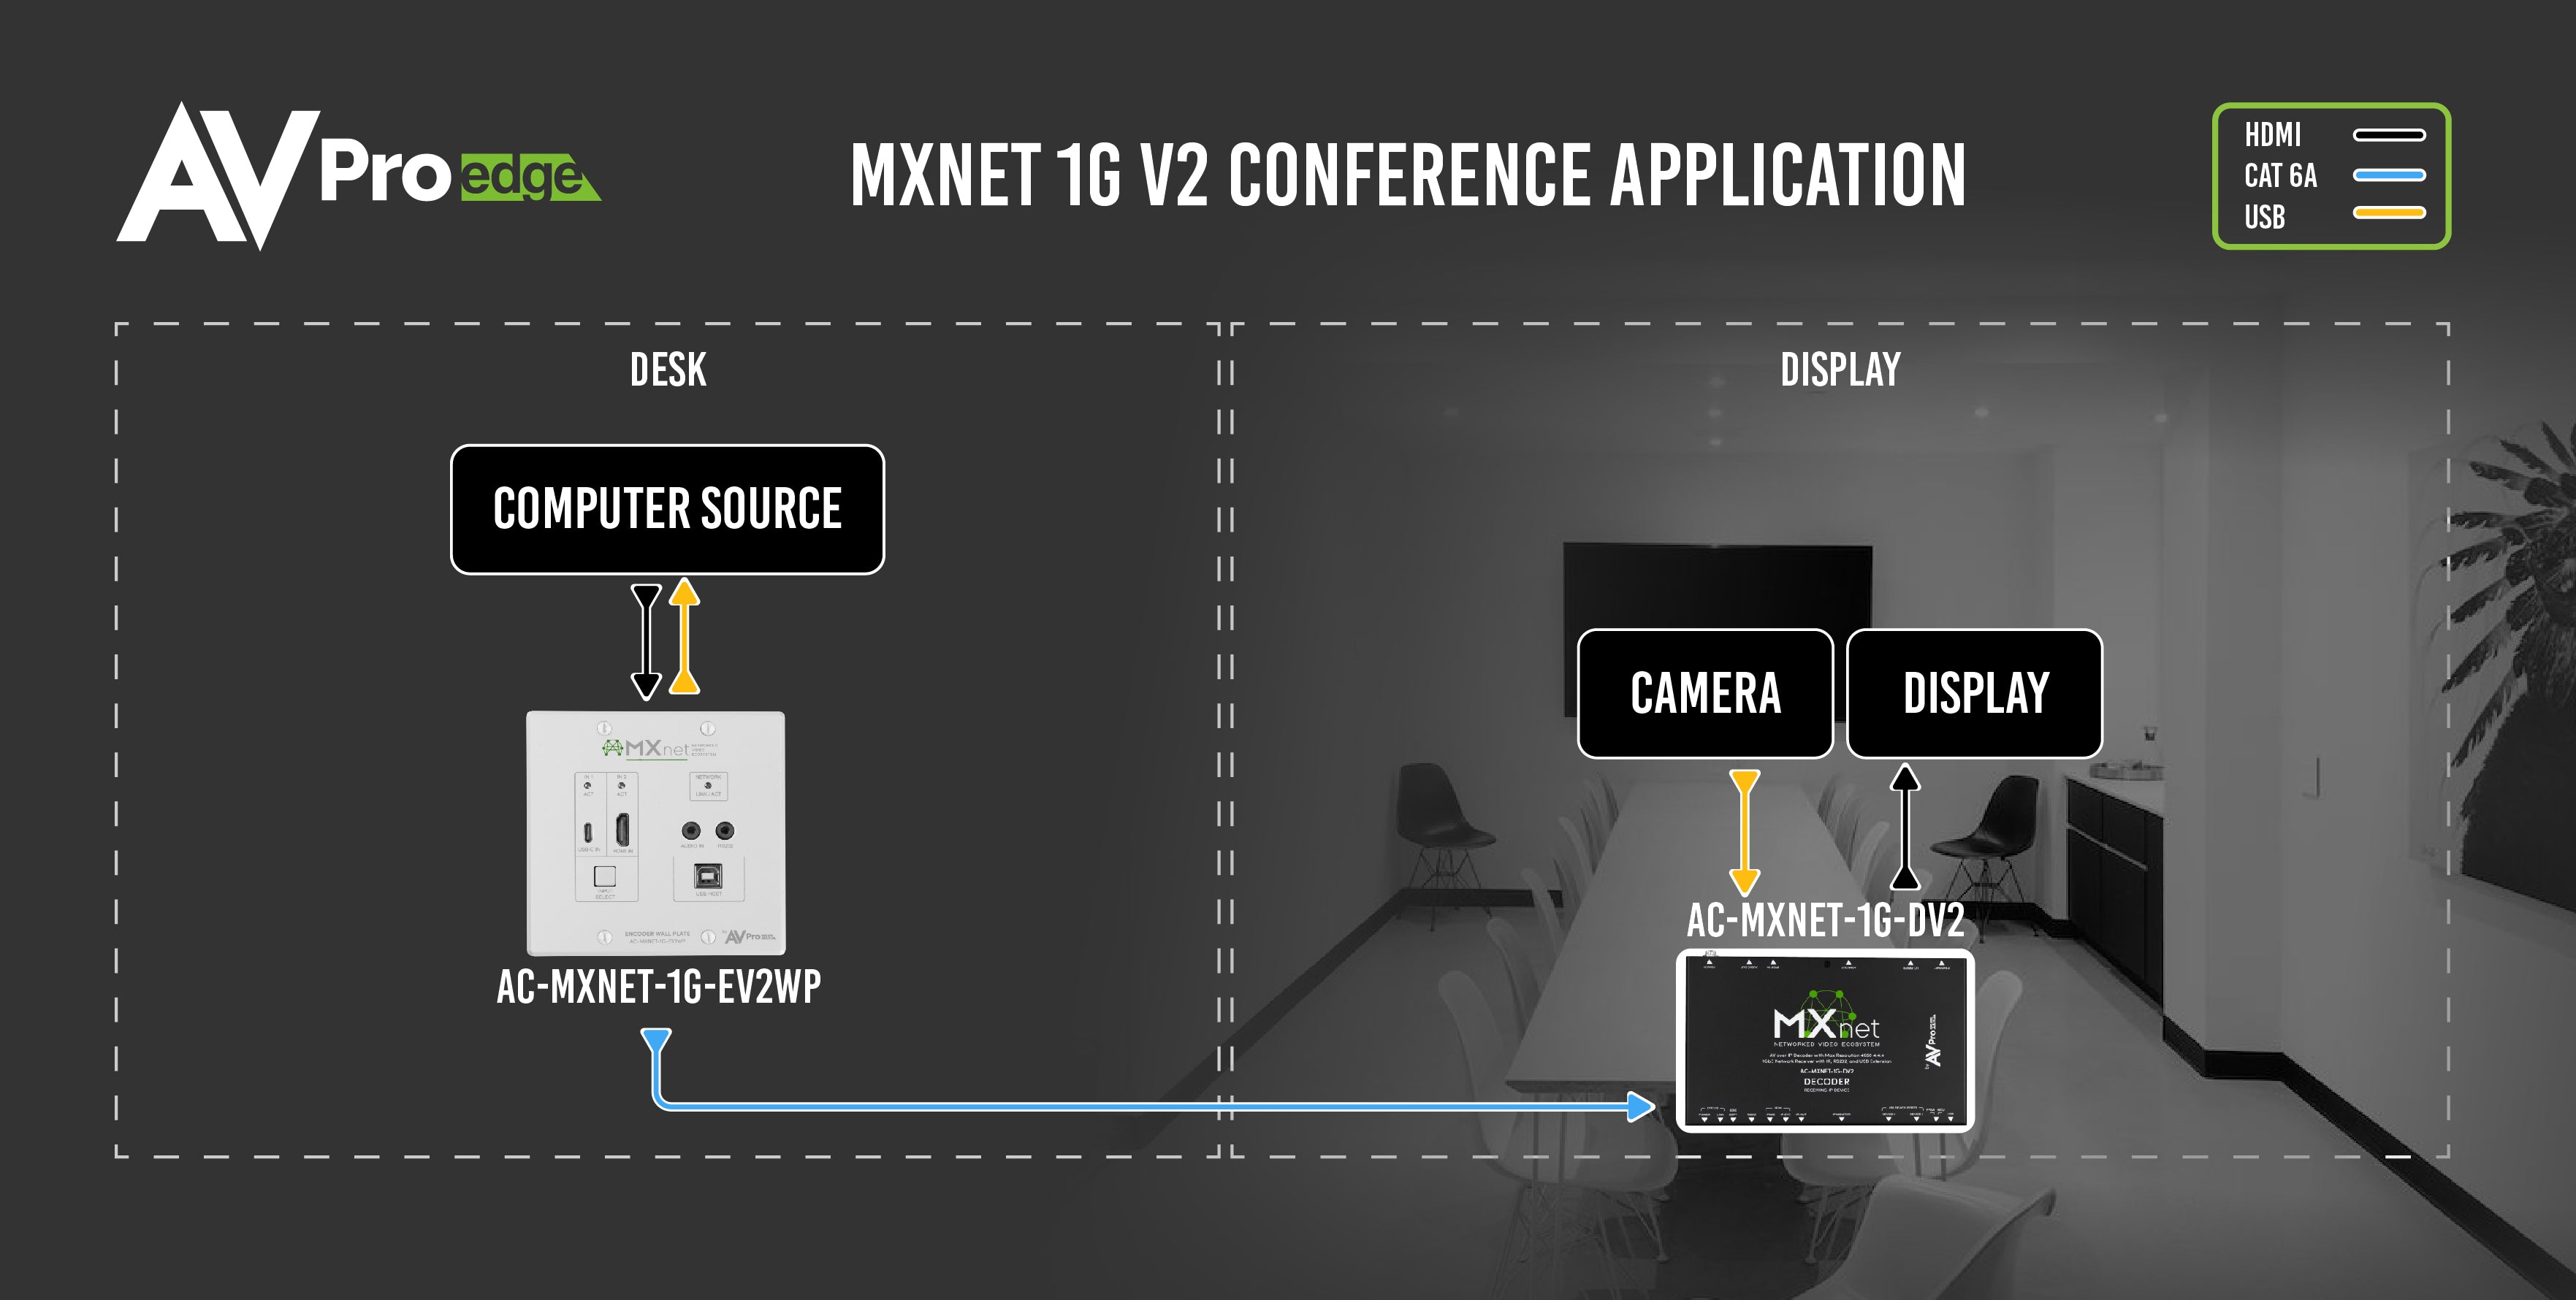 AC-MXNET-1G-EV2WP_PtP_Conference_camera_application_Diagram-01